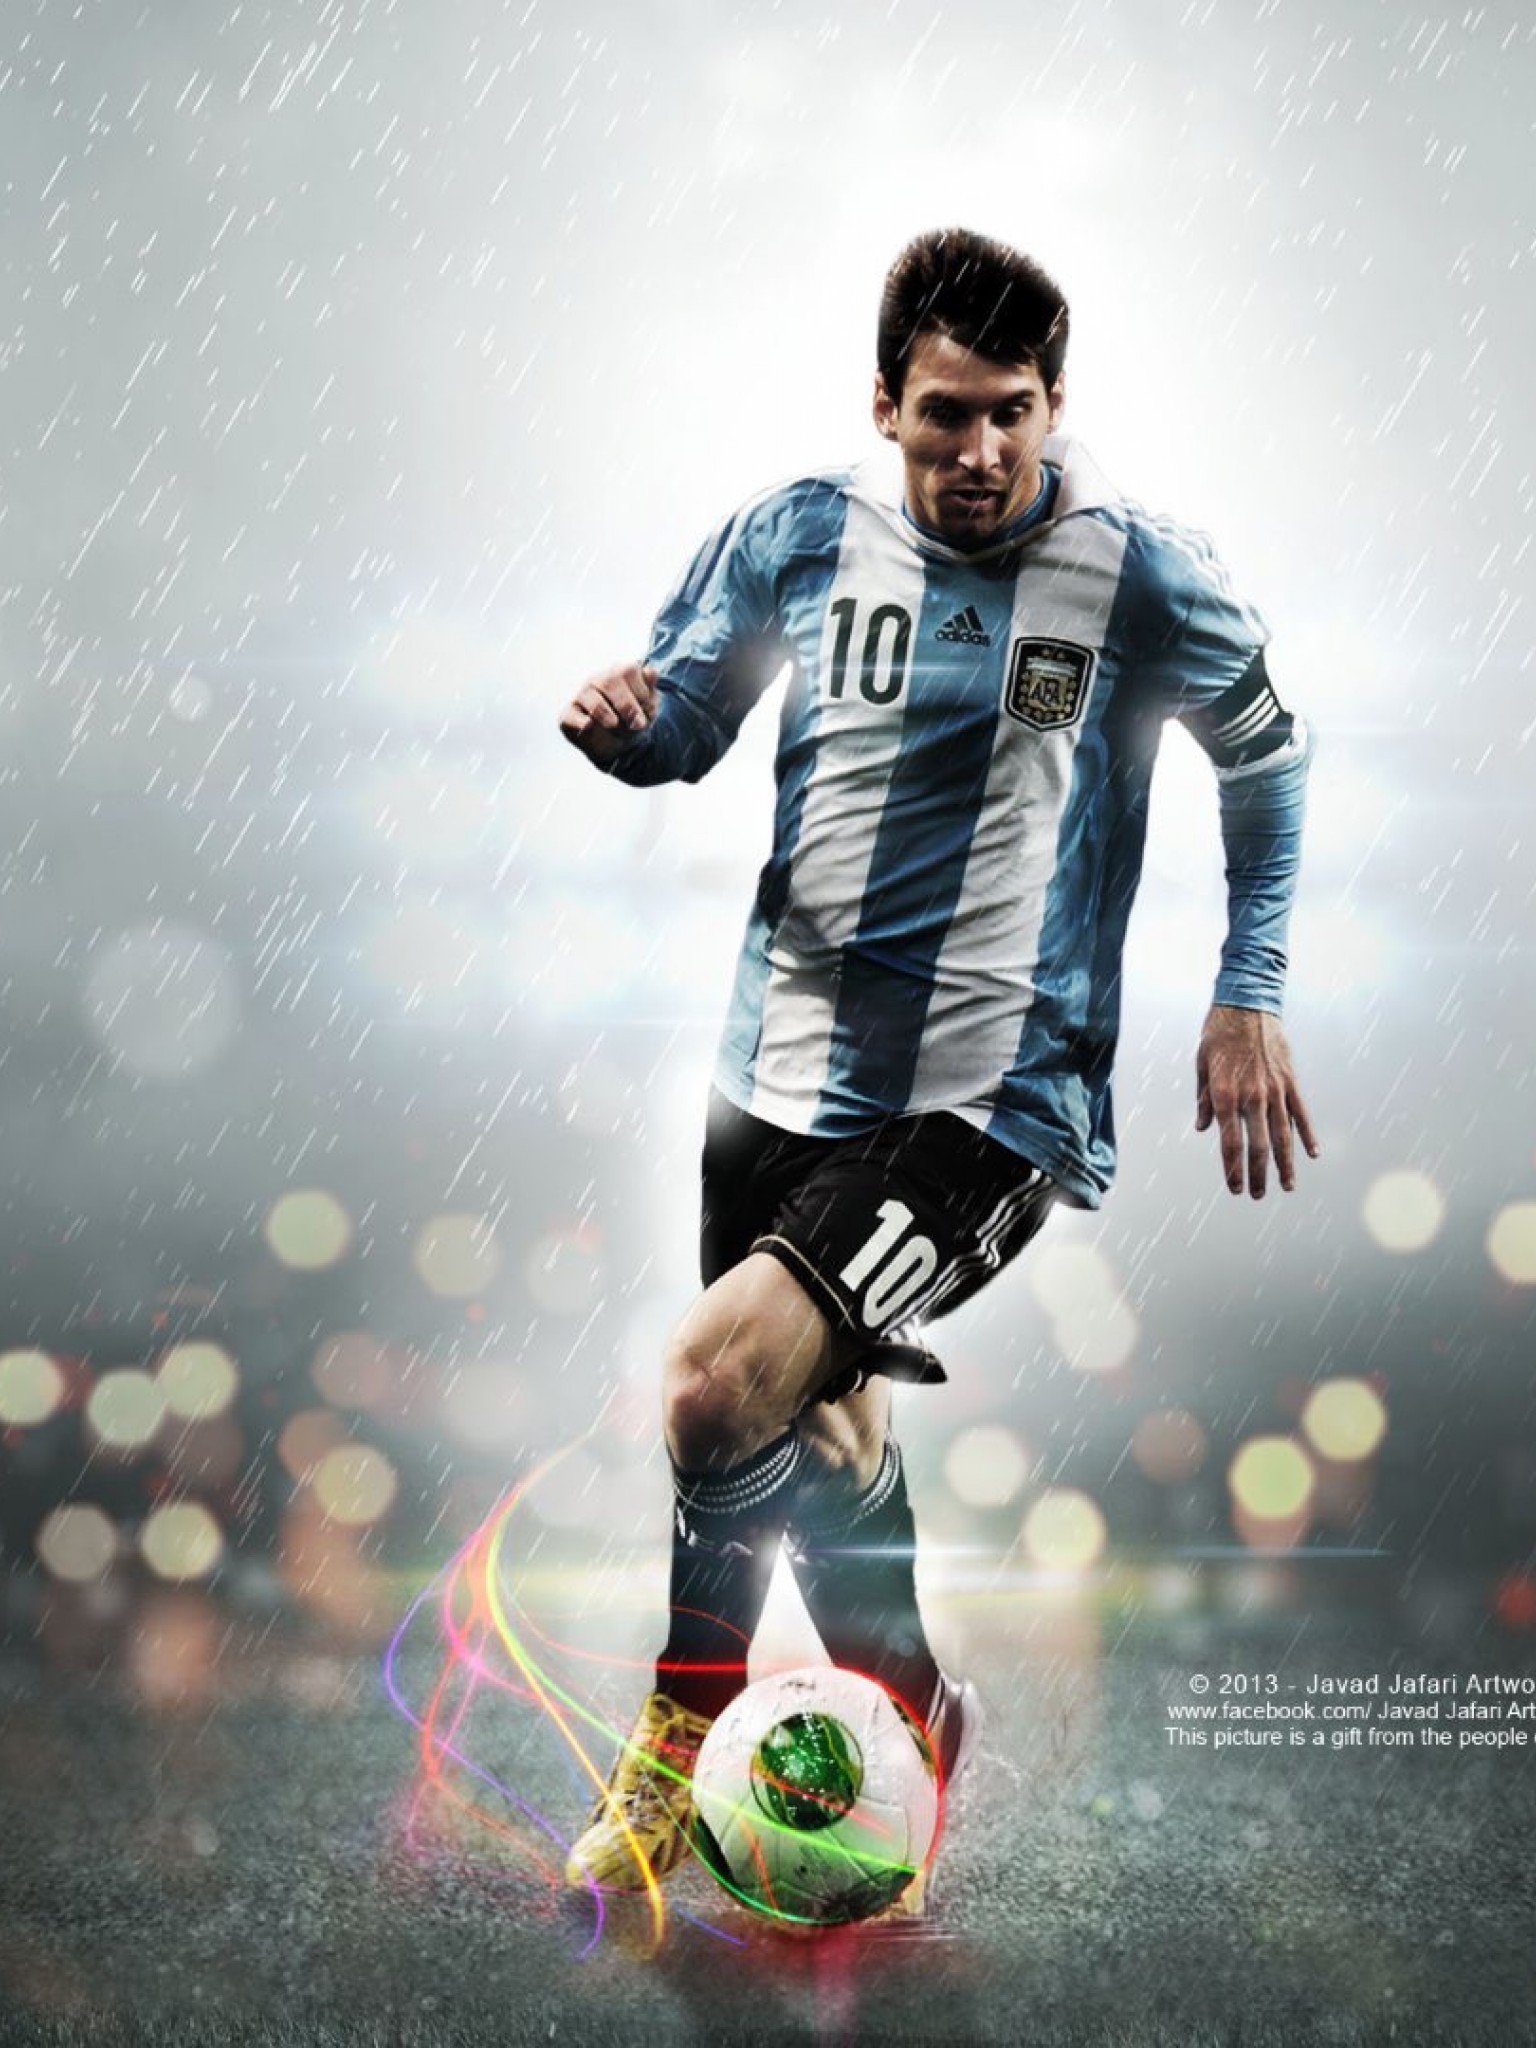 Free Download Lionel Messi HD Wallpaper for Desktop and Mobiles Retina iPad